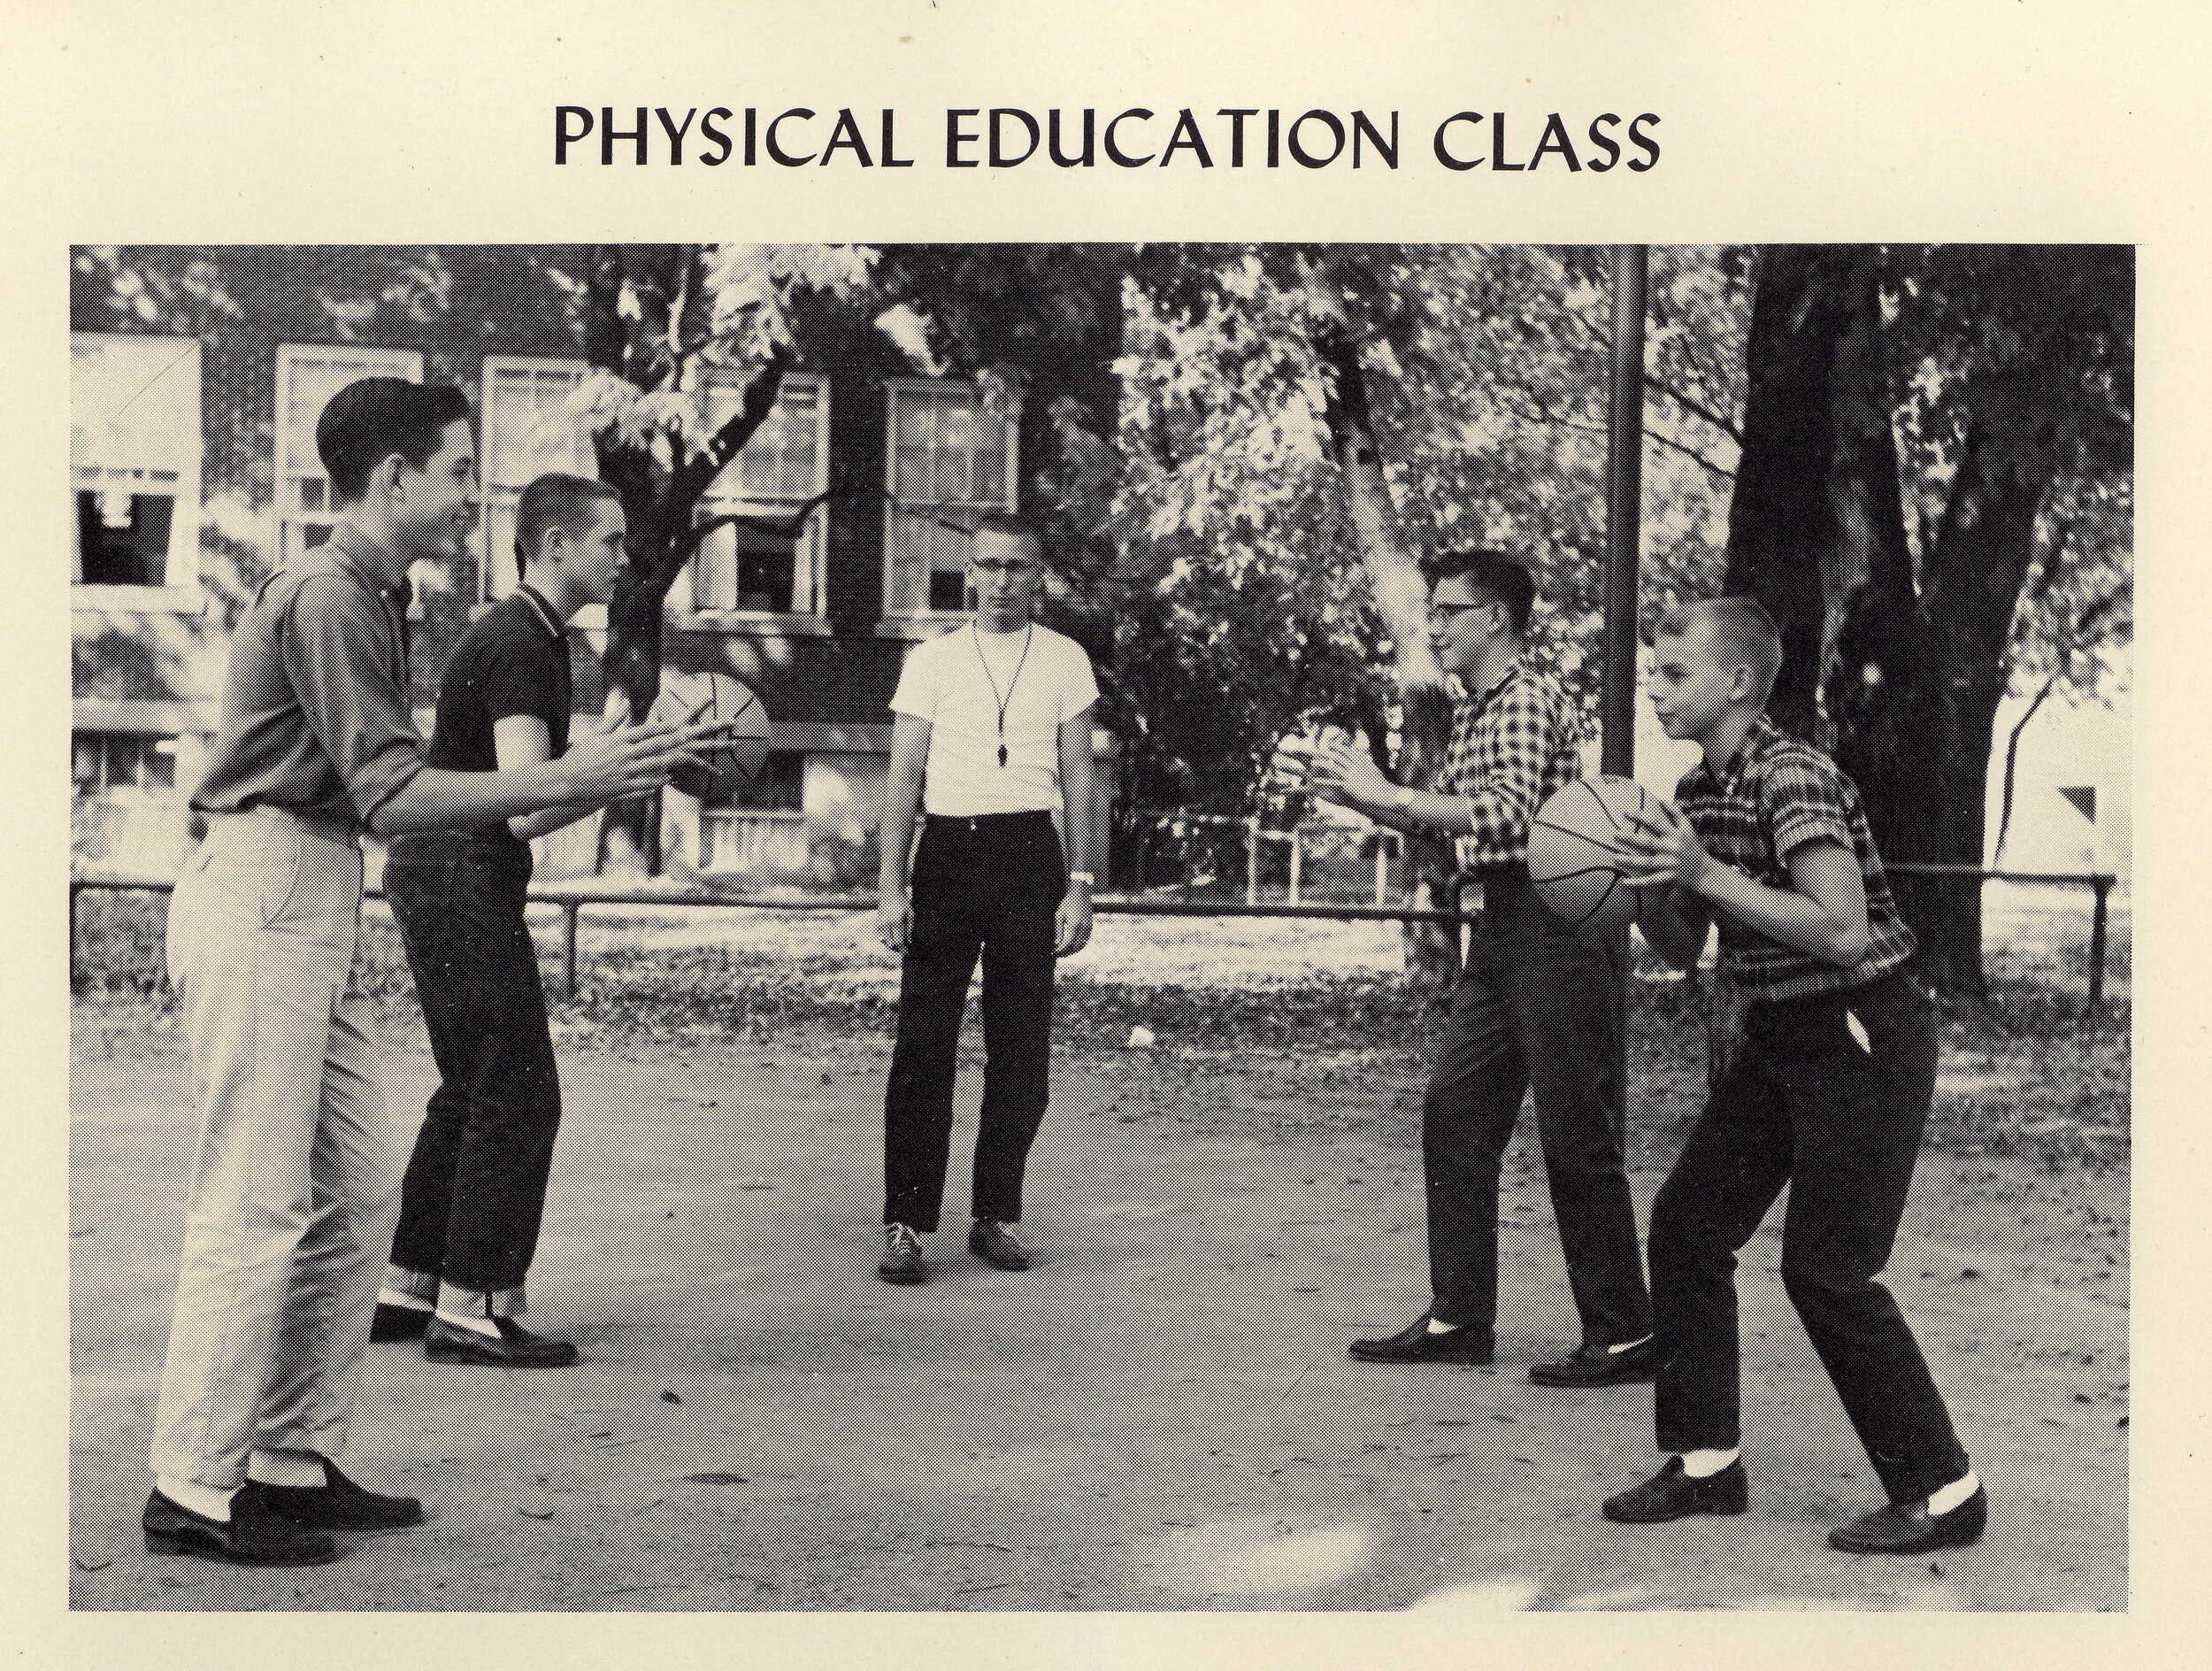 Gerald & Fellow P.E. Students, 1962